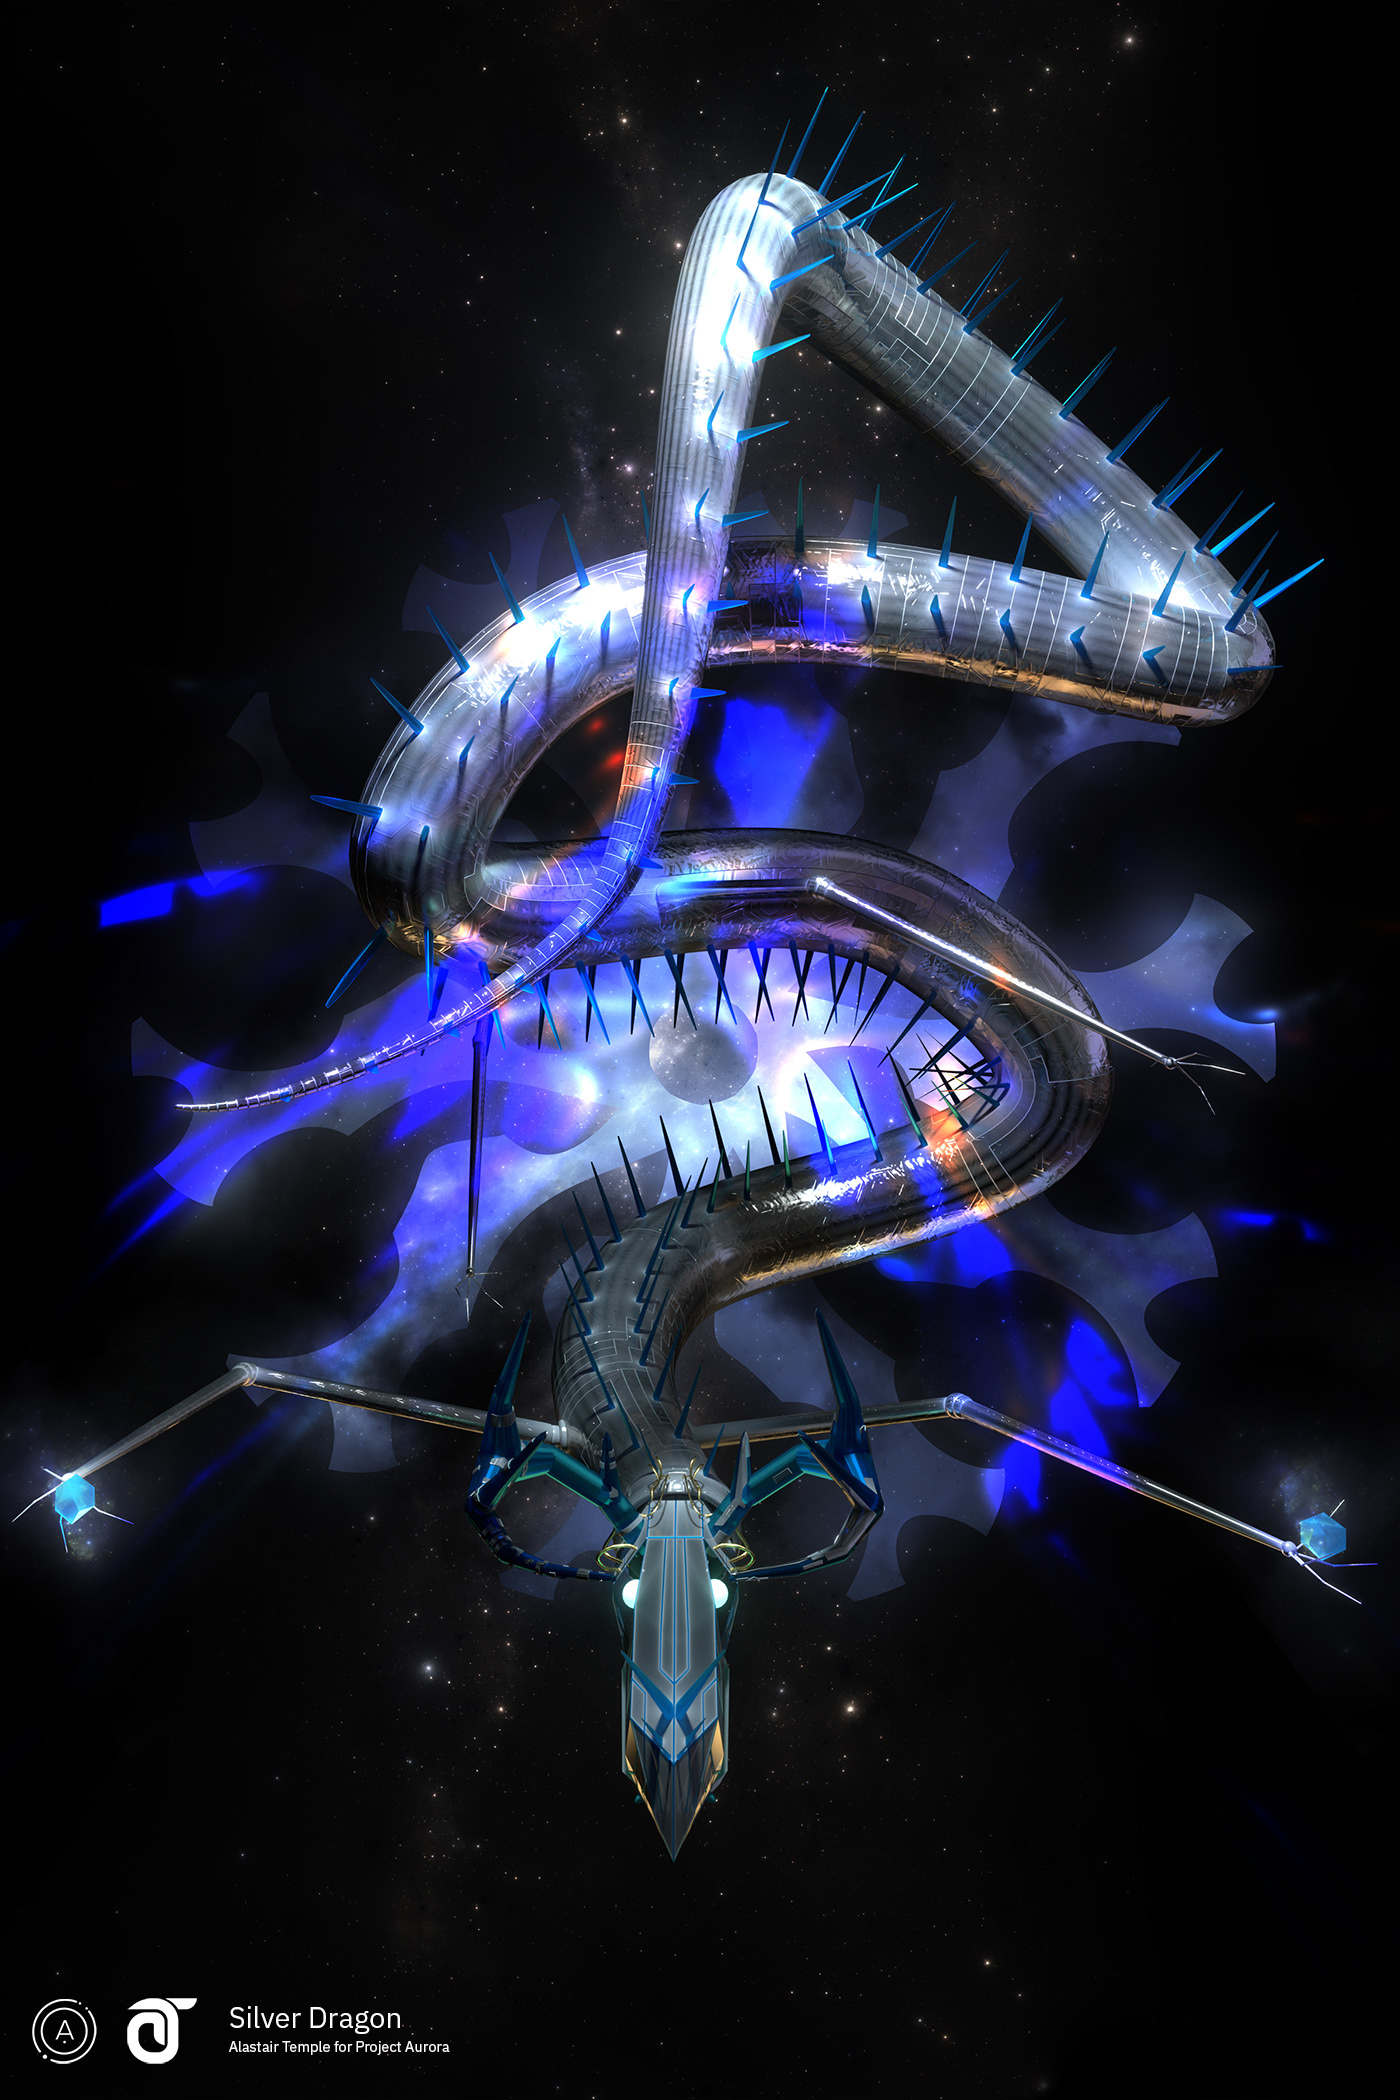 3D blender Digital Art  dragon fantasy ILLUSTRATION  sci-fi science fiction Collective  Project Aurora